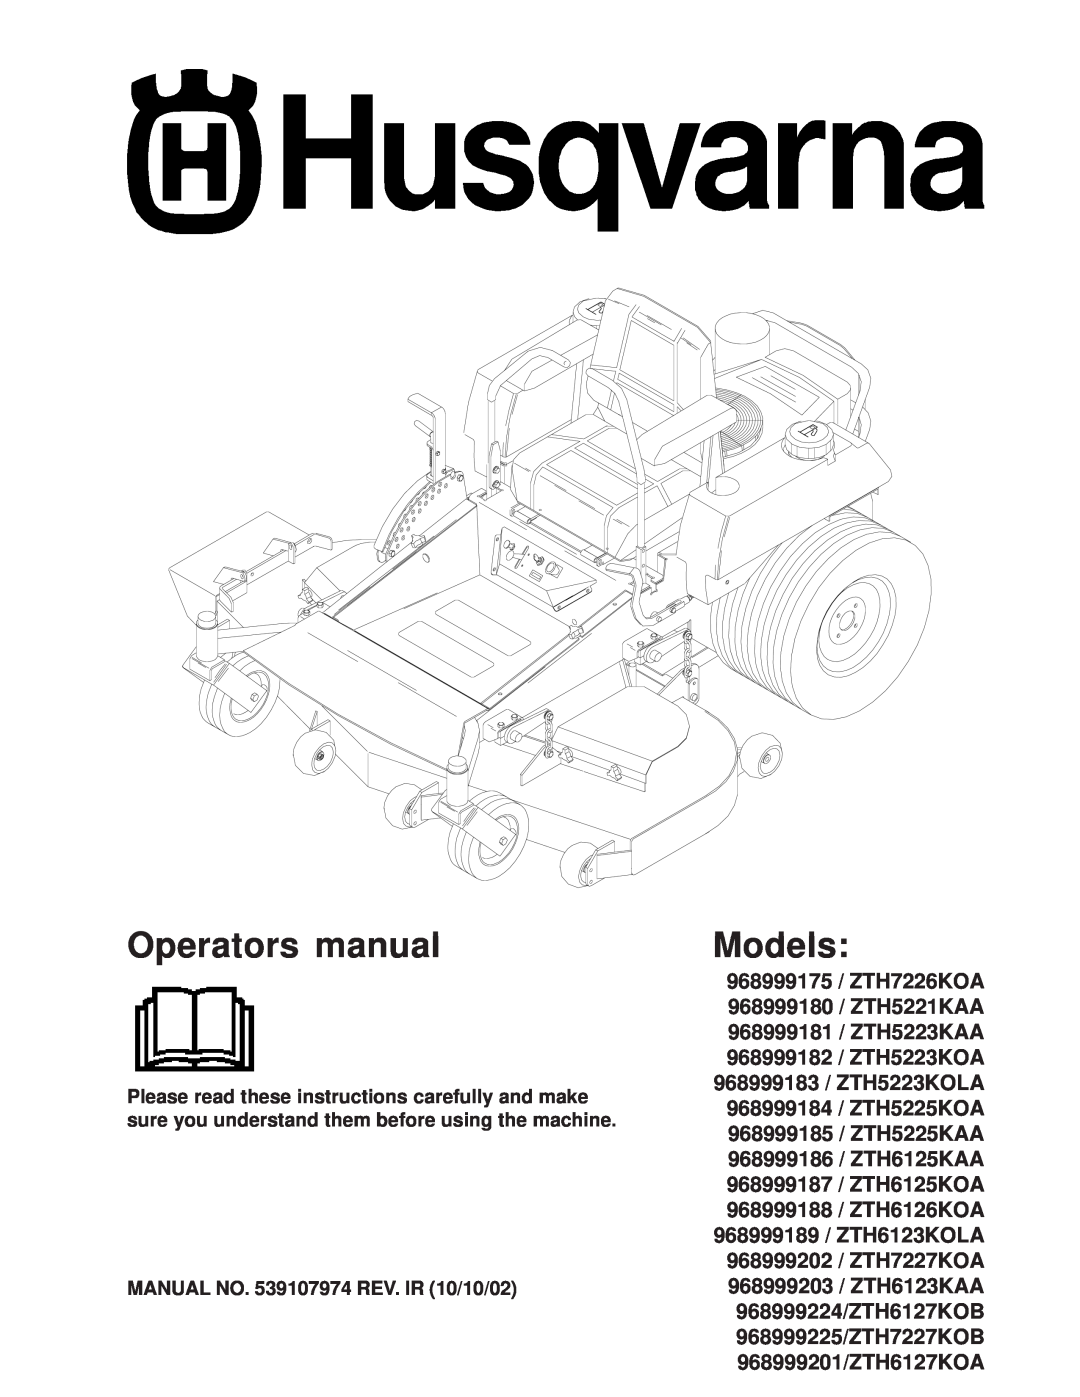 Husqvarna 968999181 / ZTH5223KAA, 968999182 / ZTH5223KOA, 968999183 / ZTH5223KOLA manual Operators manual, Models 